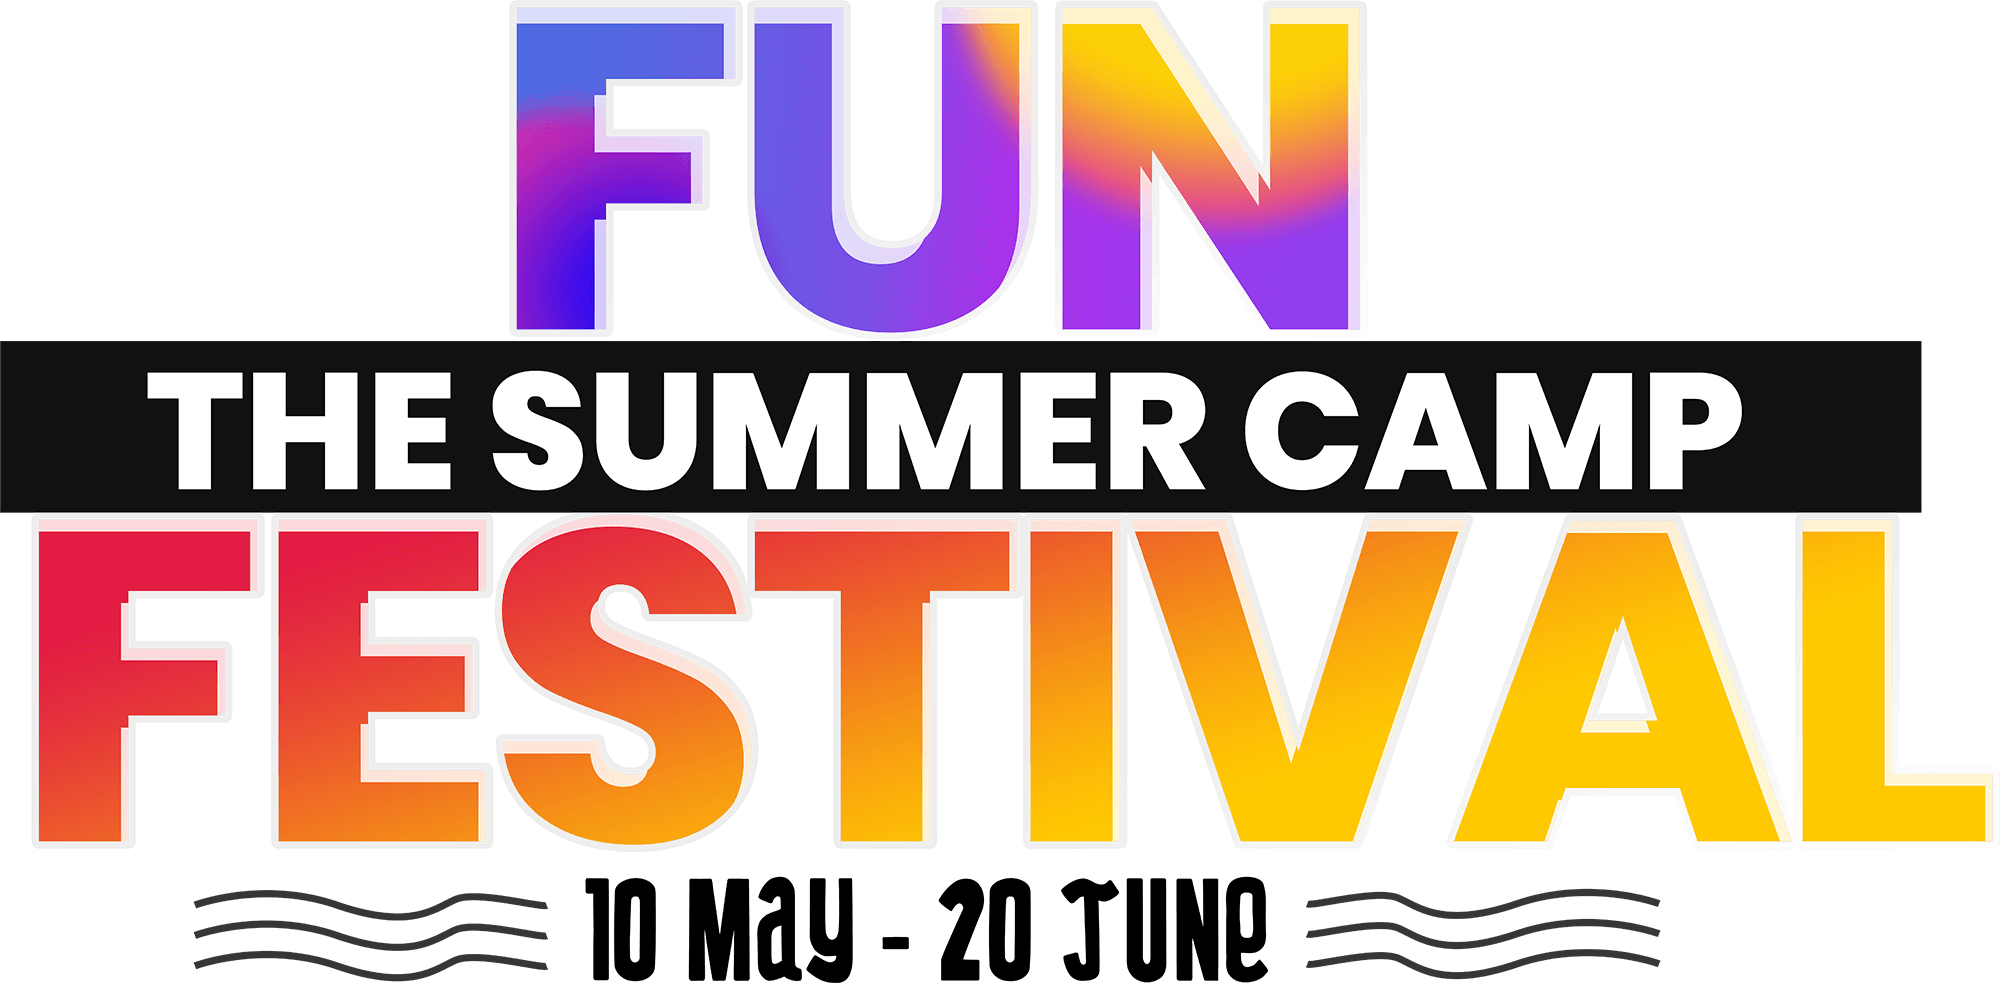 Fun Festival, The Summer Camp Banswara